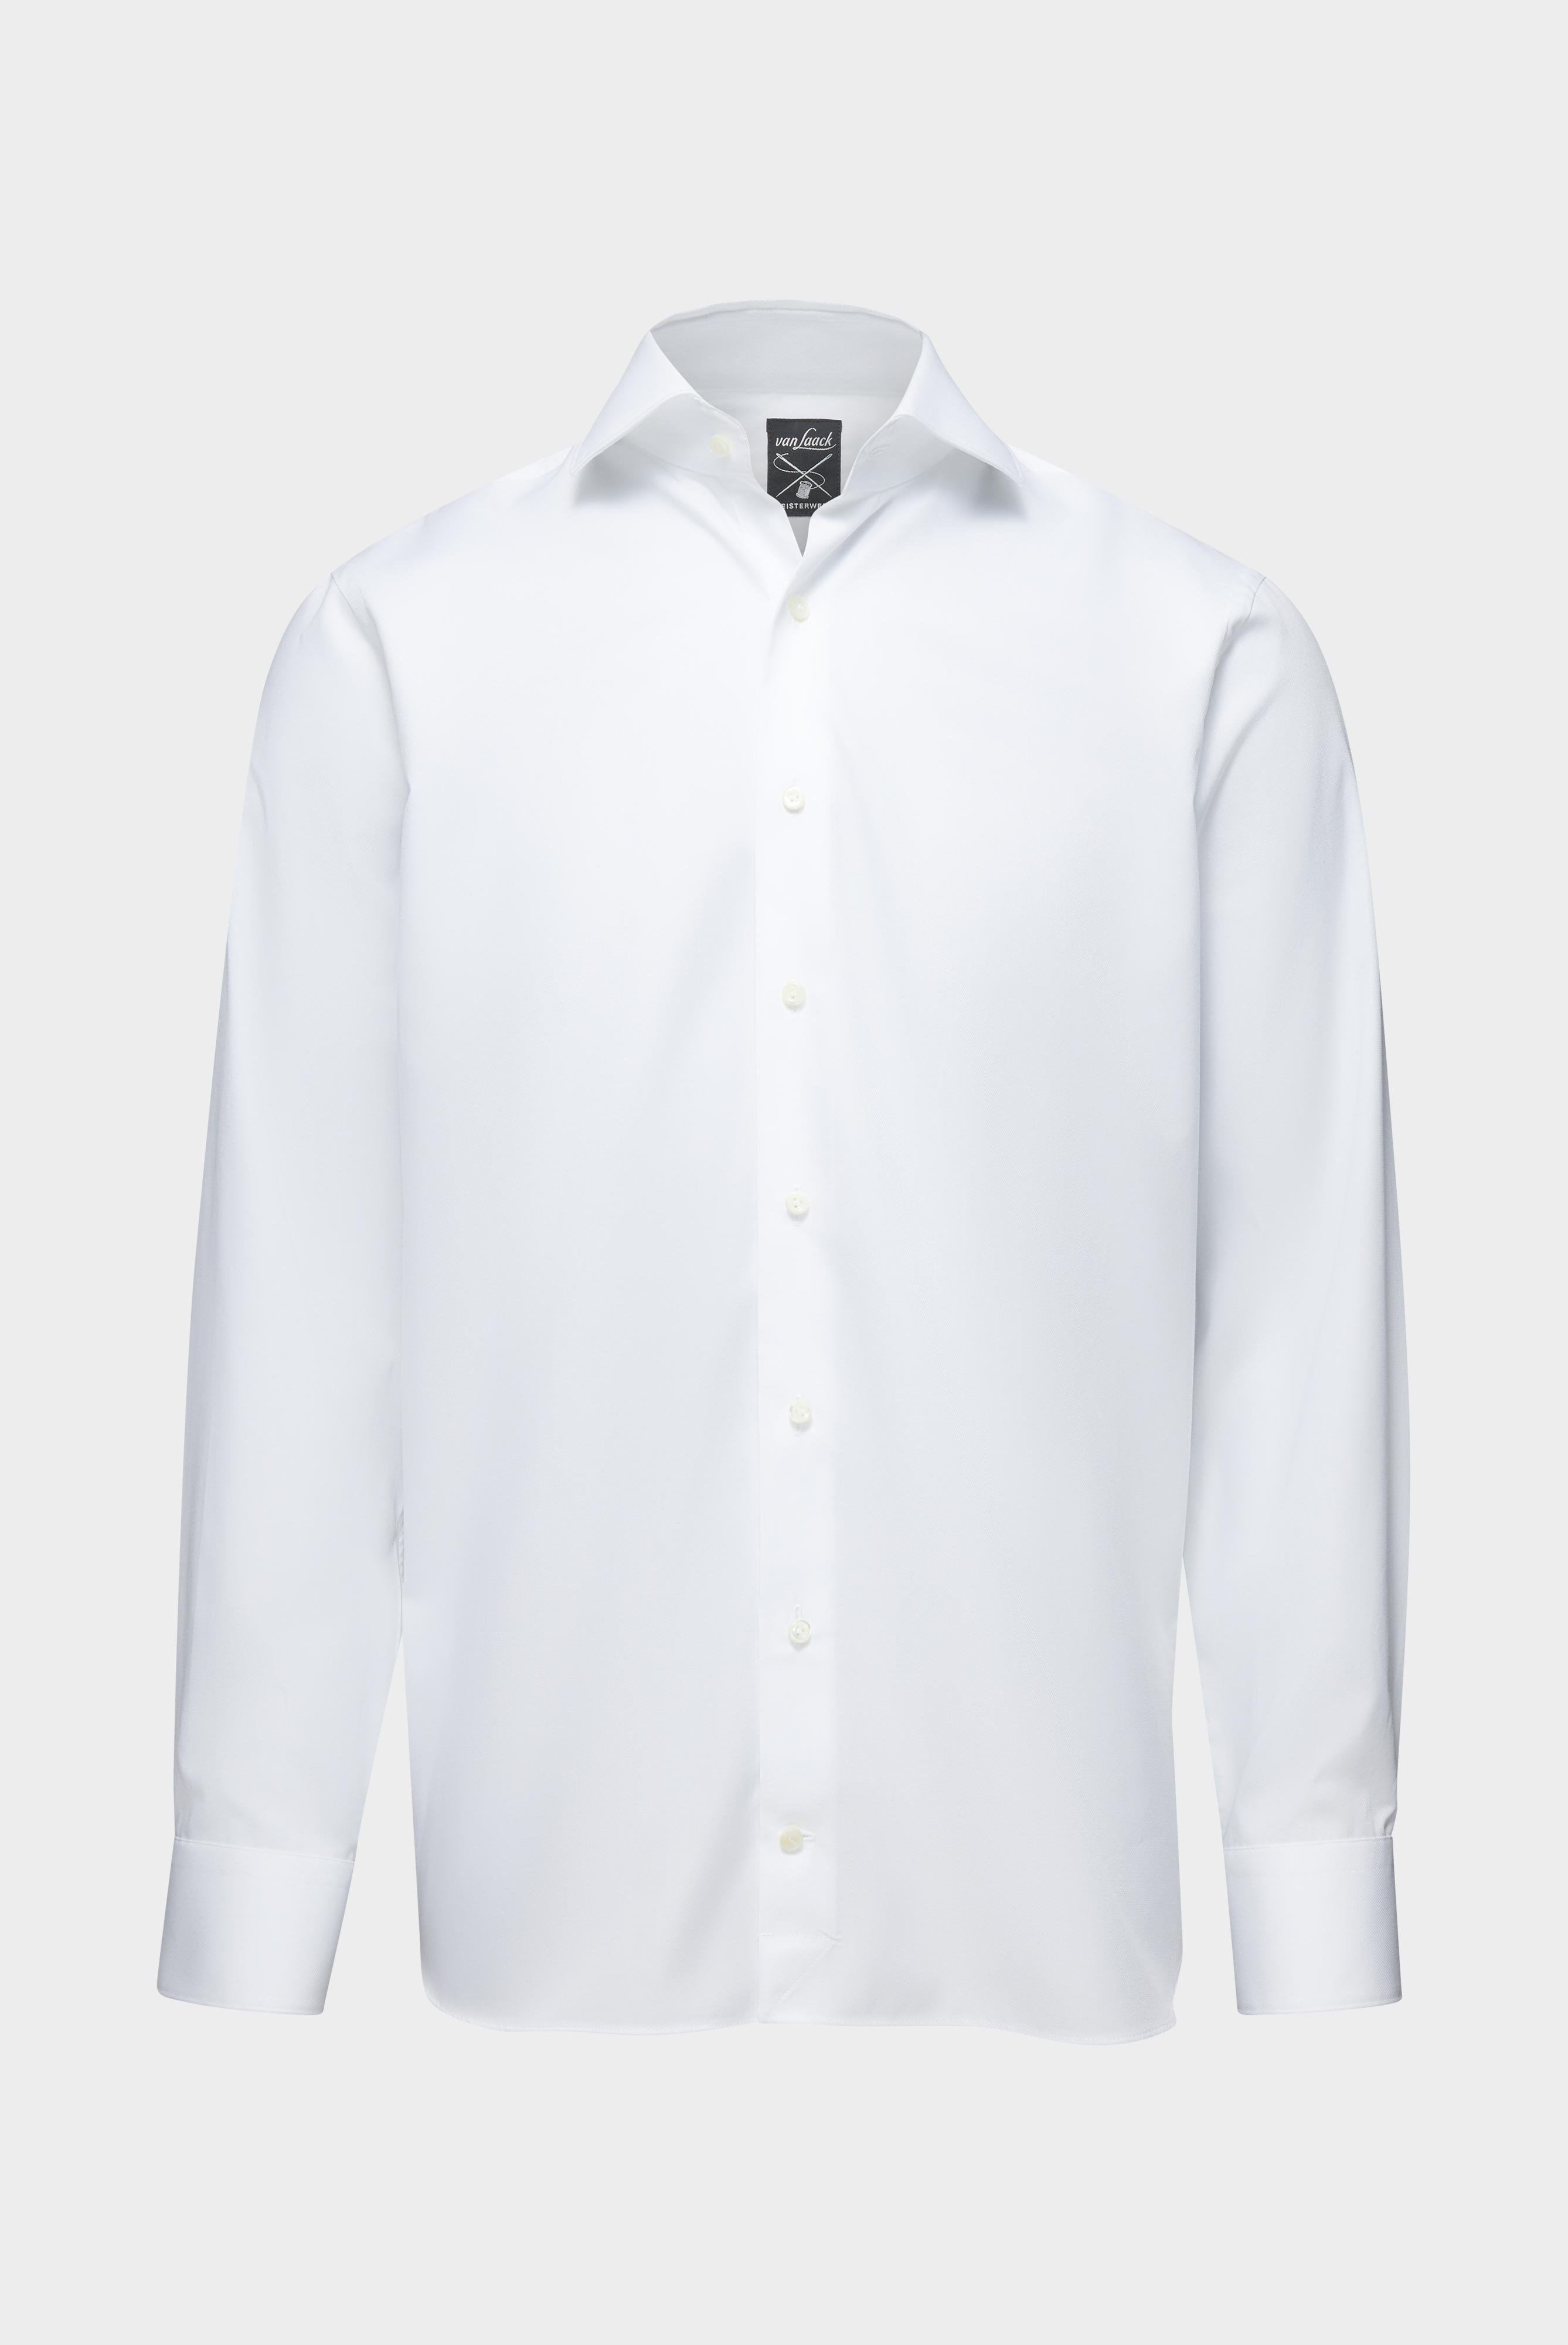 Business Hemden+Hemd mit Strukturmuster in Sartoriale Verarbeitung Tailor Fit+20.2502.NV.151209.000.38